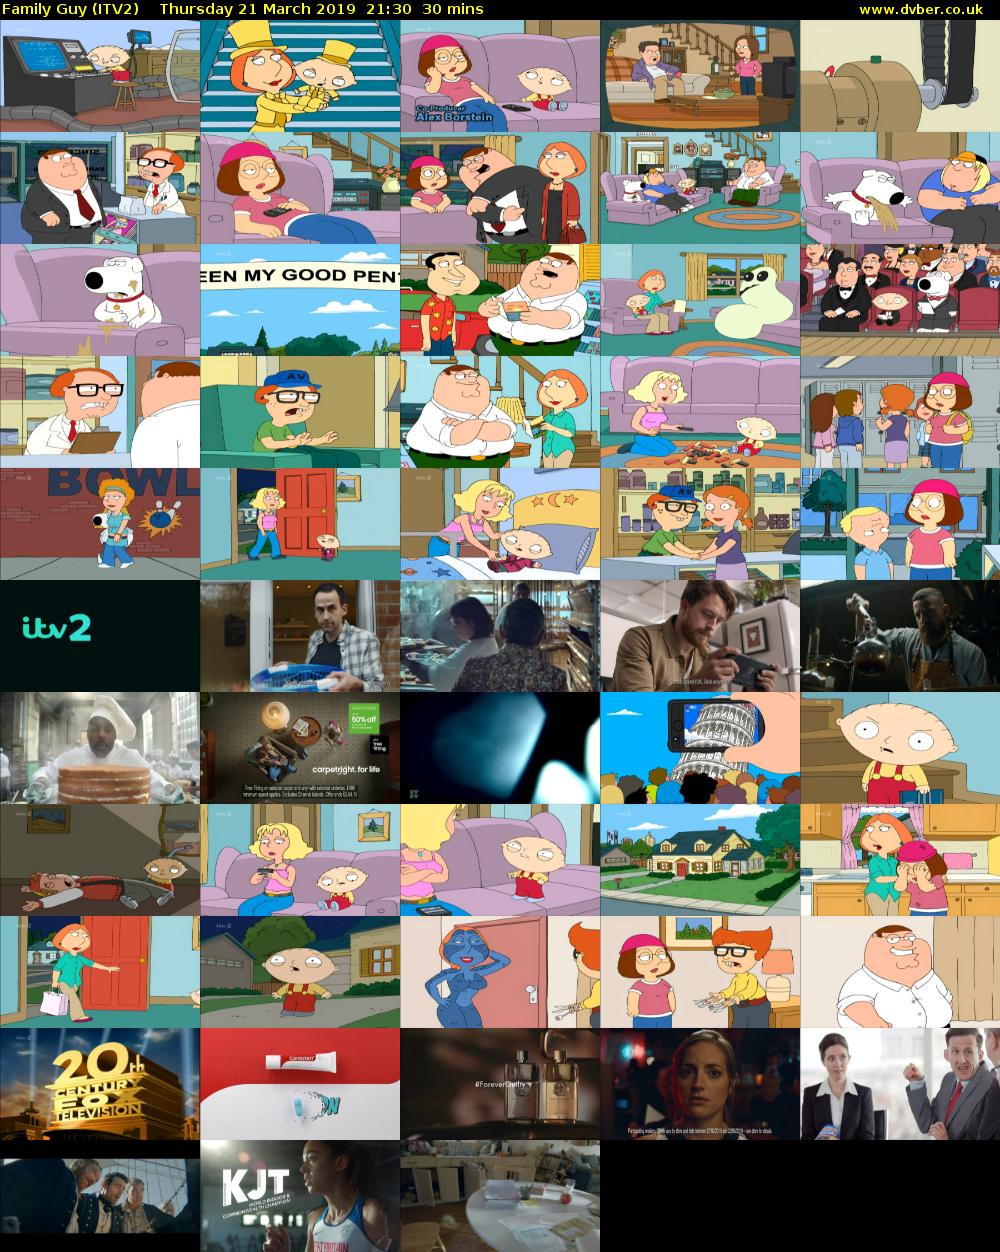 Family Guy (ITV2) Thursday 21 March 2019 21:30 - 22:00